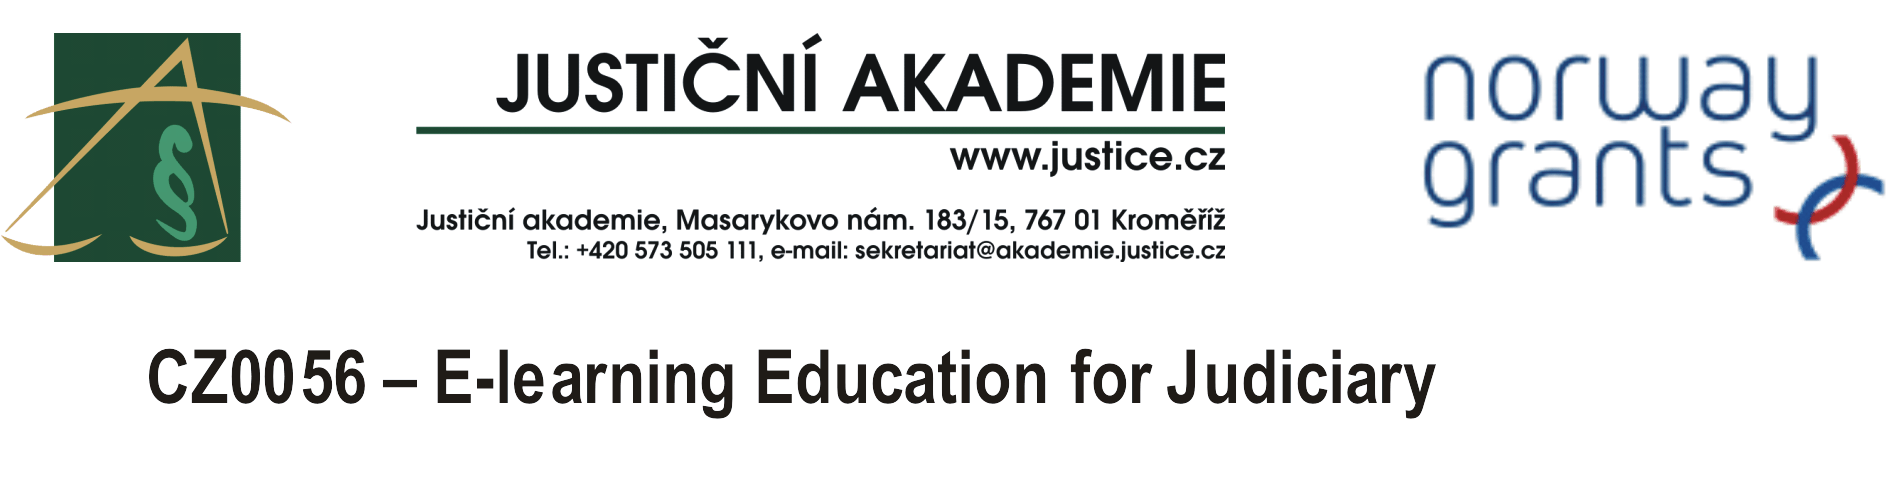 Logo projektu E-learning Education for Judiciary